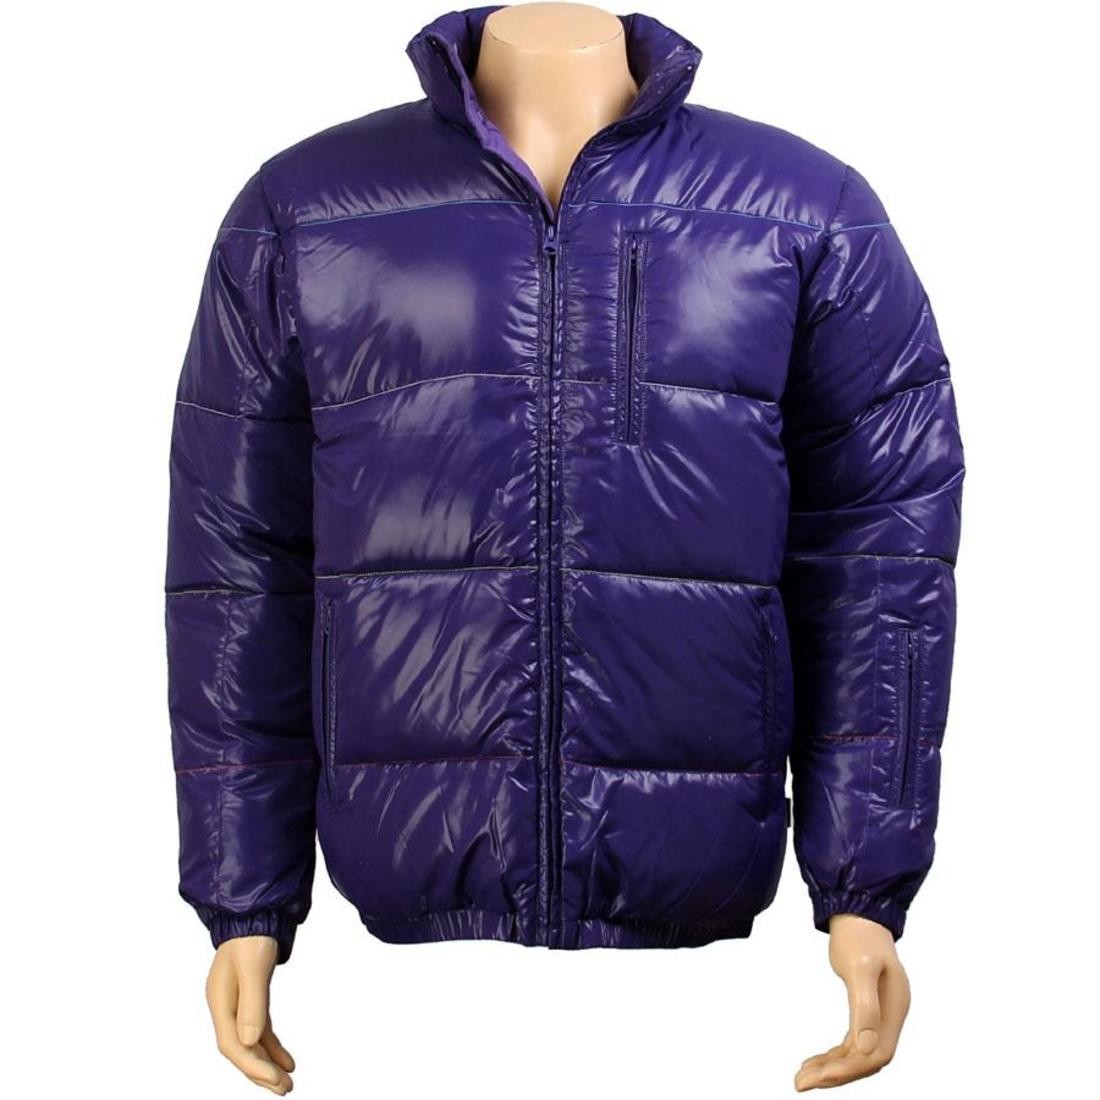 Rock Smith Bomber Jacket (purple)